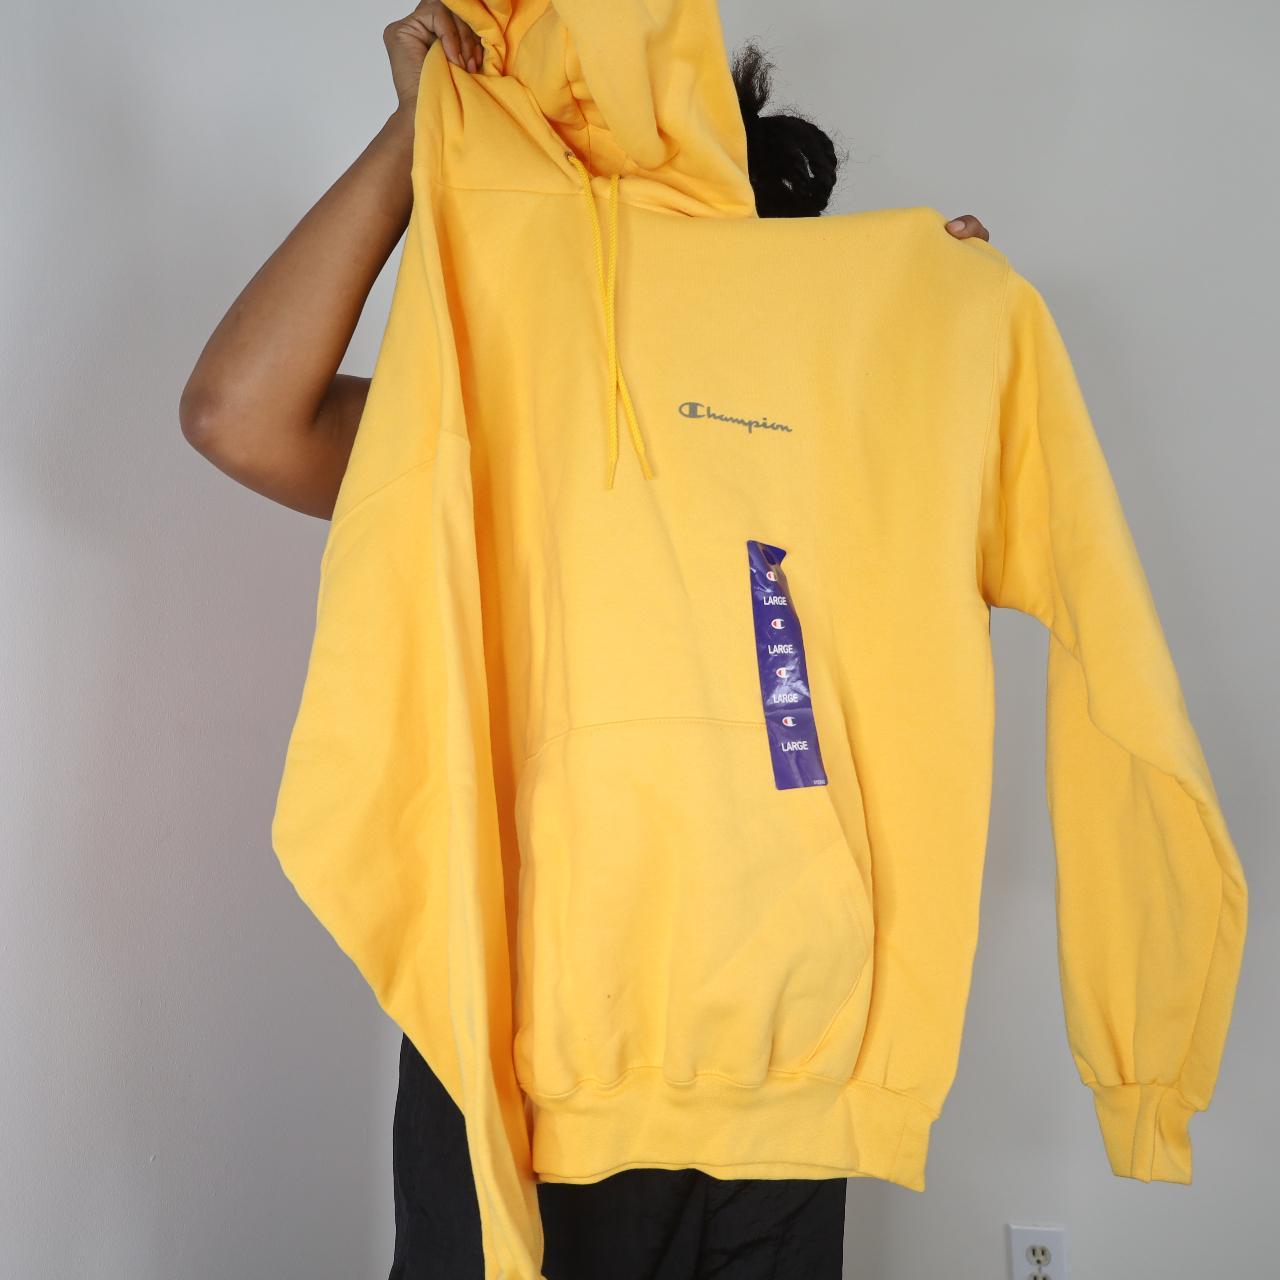 nwt yellow champion hoodie large #vintage #yellow... - Depop